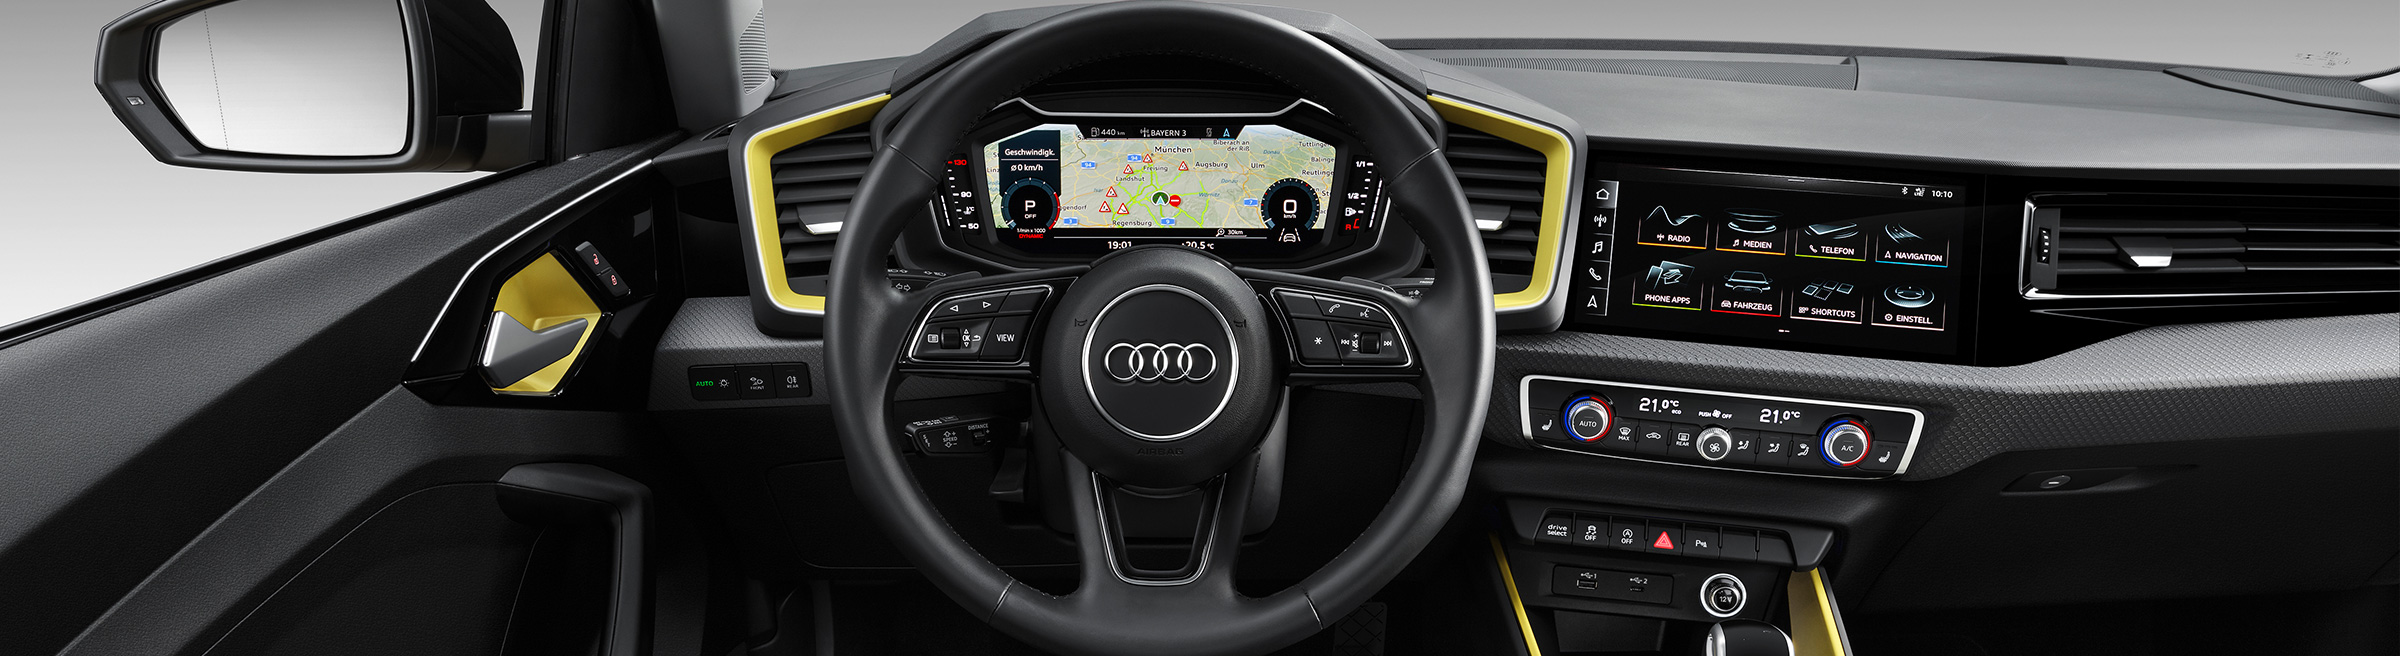 Digital pekskärm - Nya Audi A1 Sportback